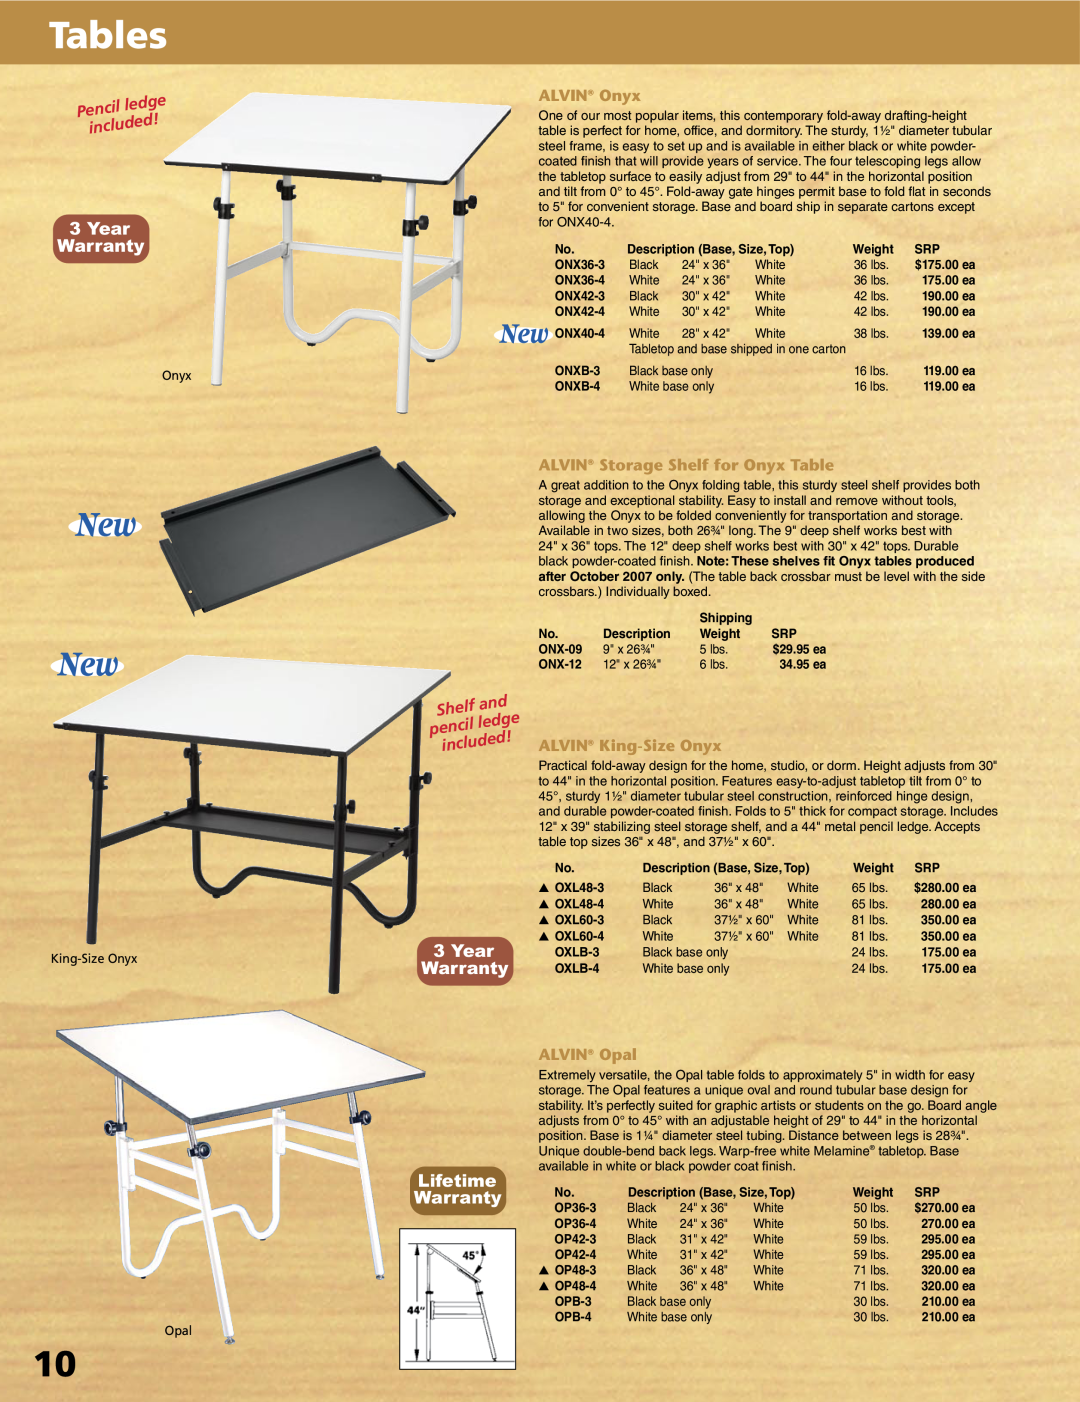 Alvin XX-3-XB Tables, 3Year Warranty Lifetime Warranty, Pencil, ledge, included, ALVIN Onyx, Shelf, pencil, ALVIN Opal 